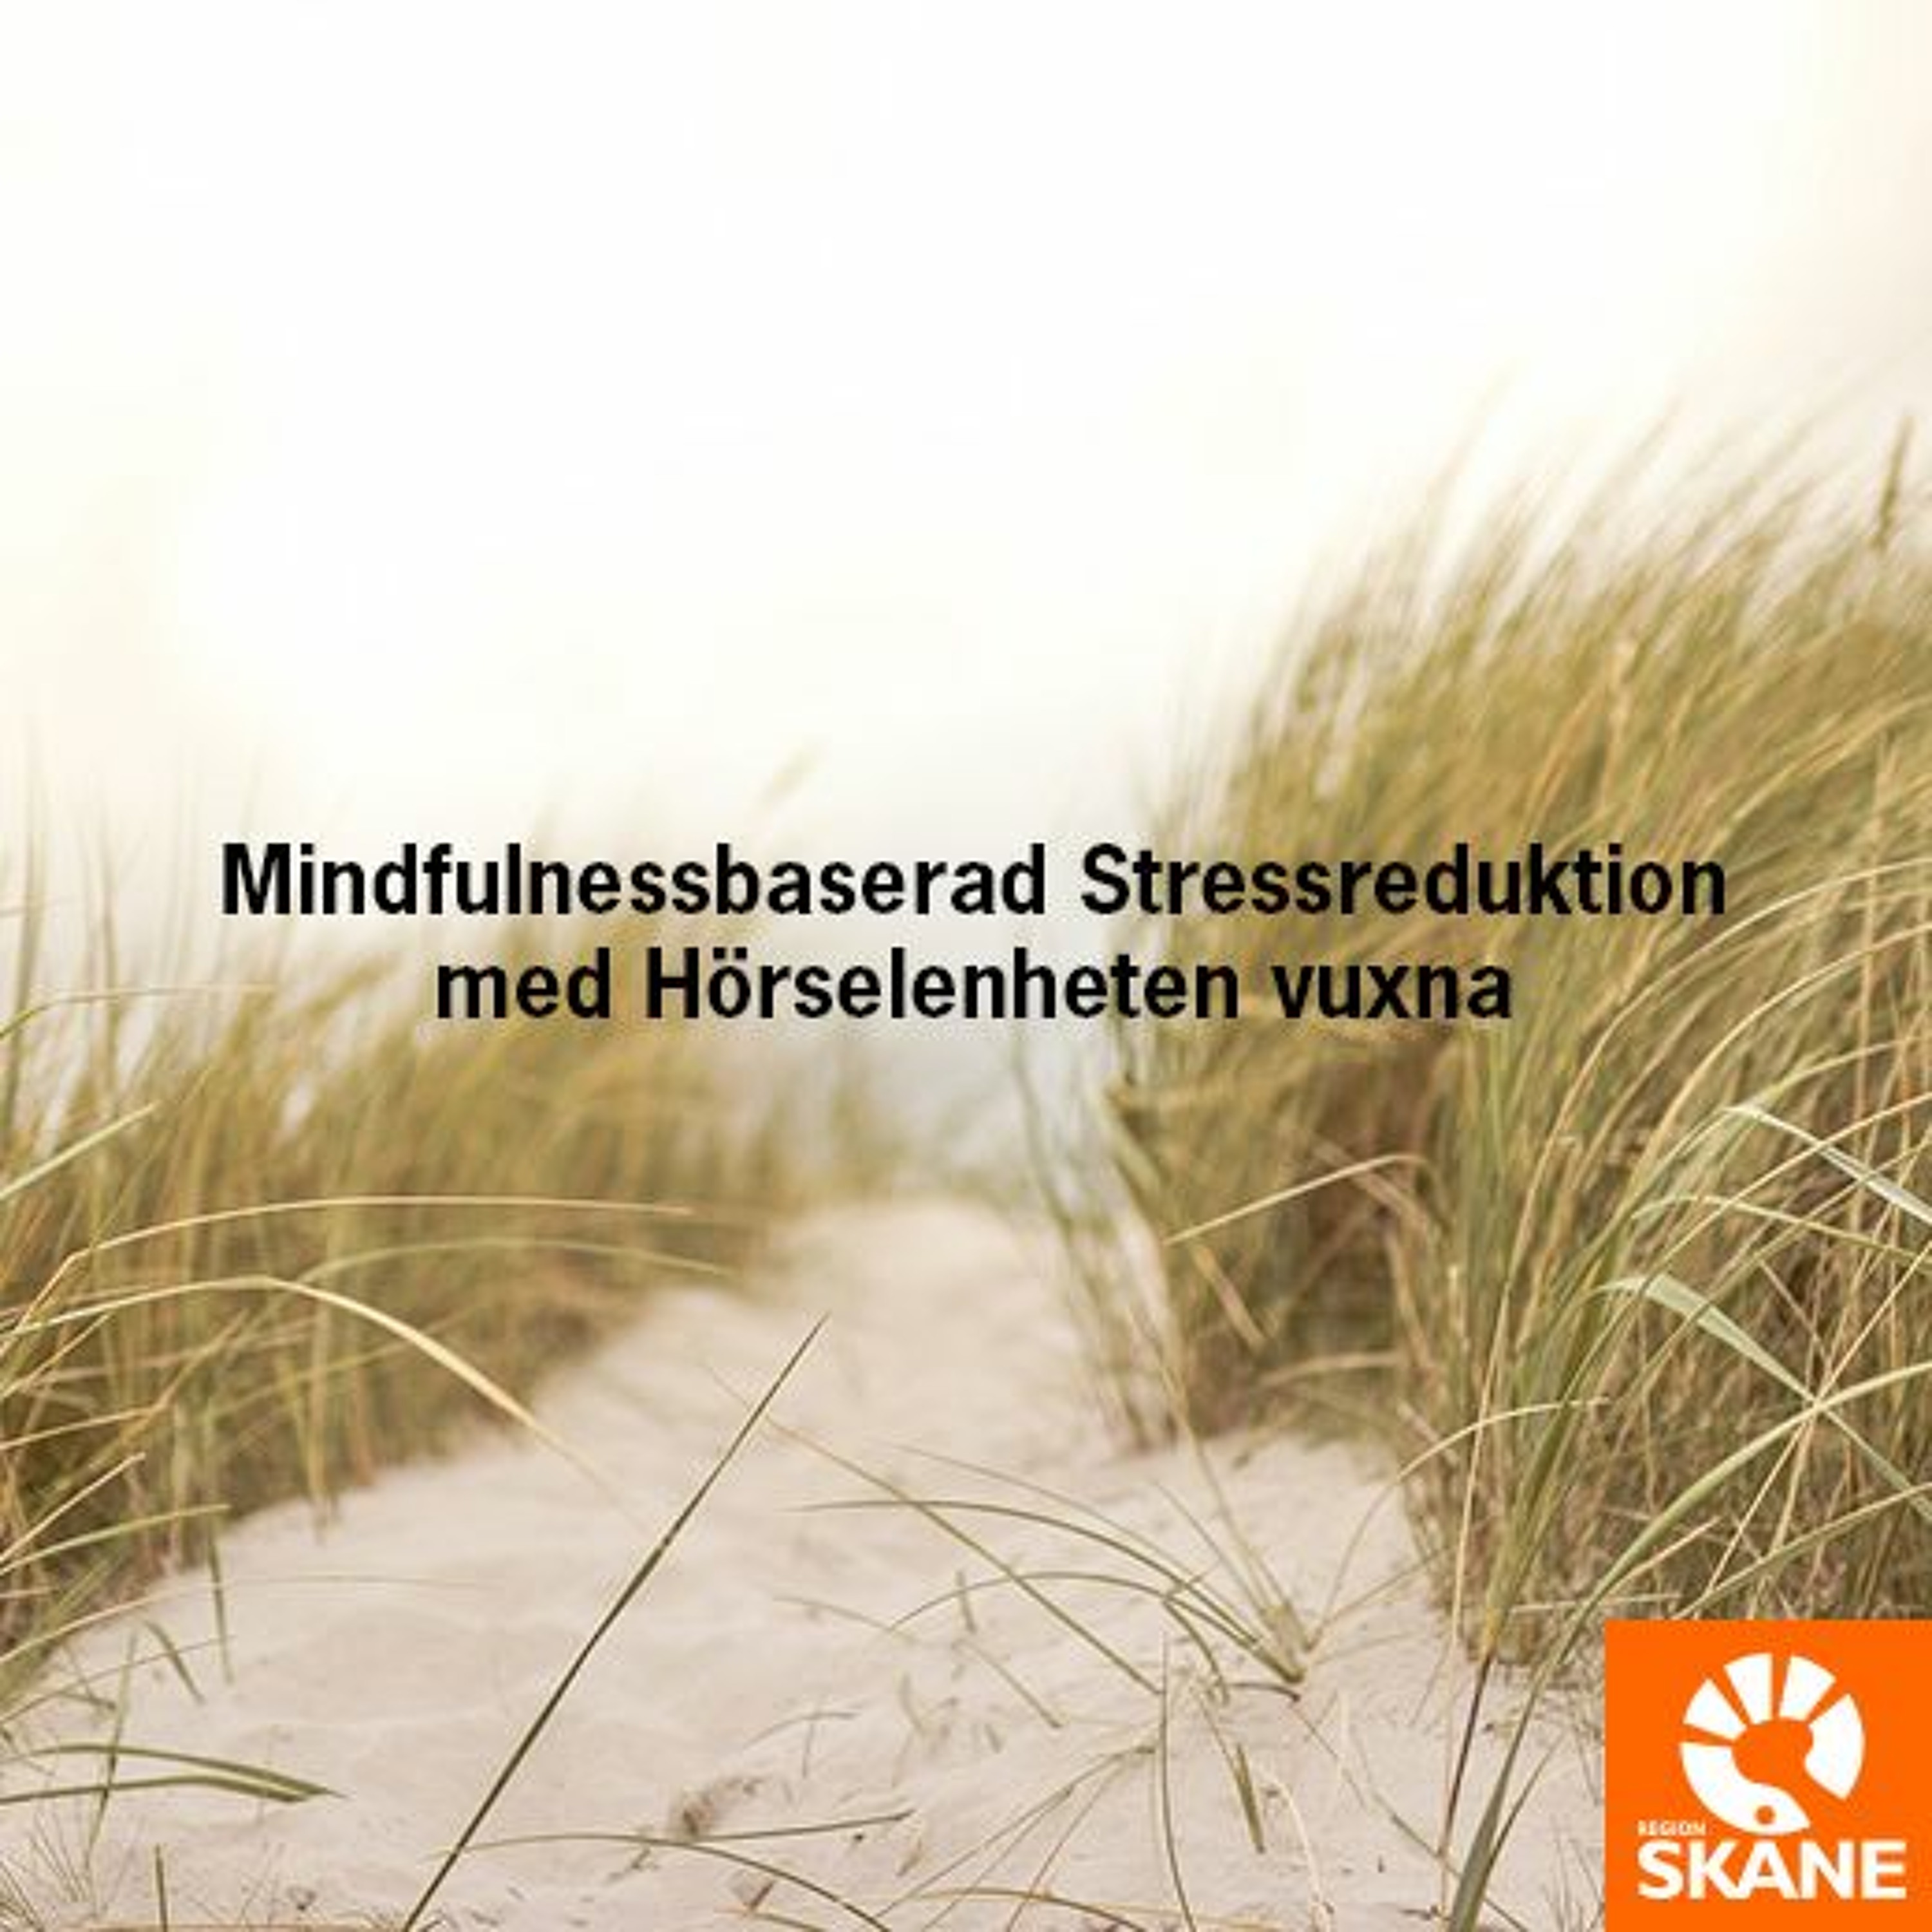 Mindfulnessbaserad Stressreduktion - Yoga, liggande